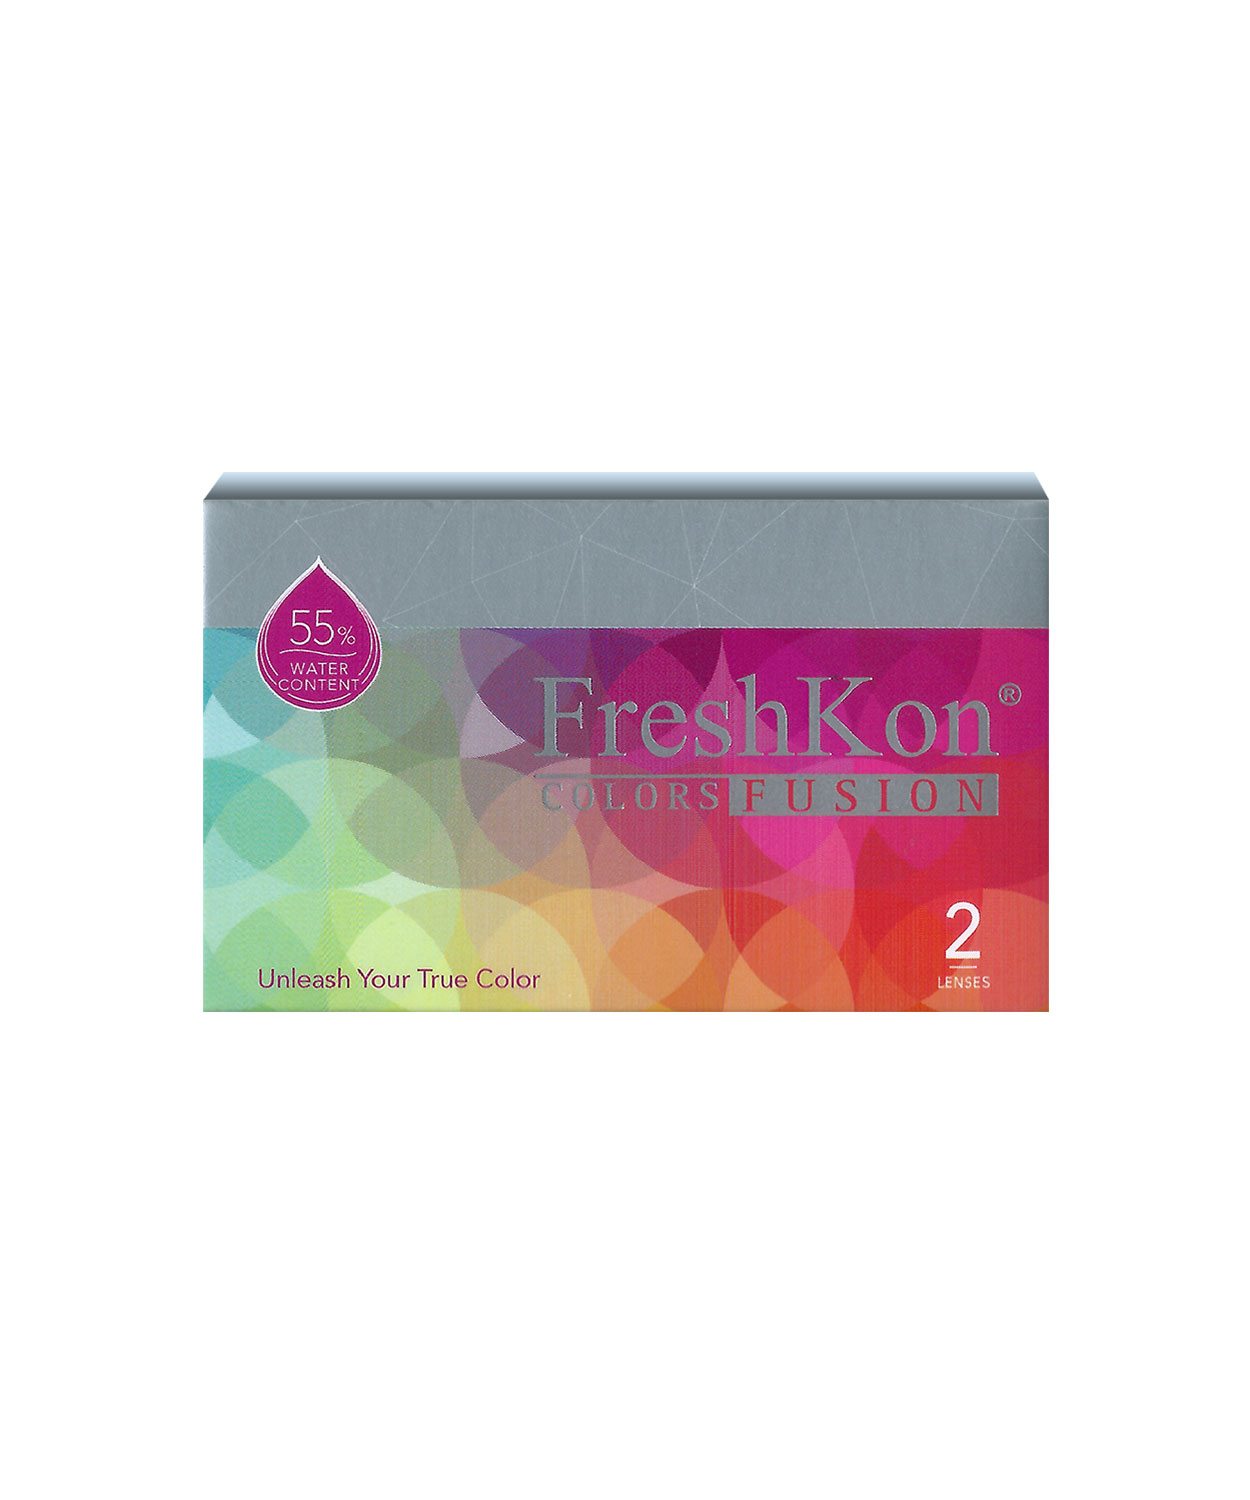 freshkon-colorsfusion